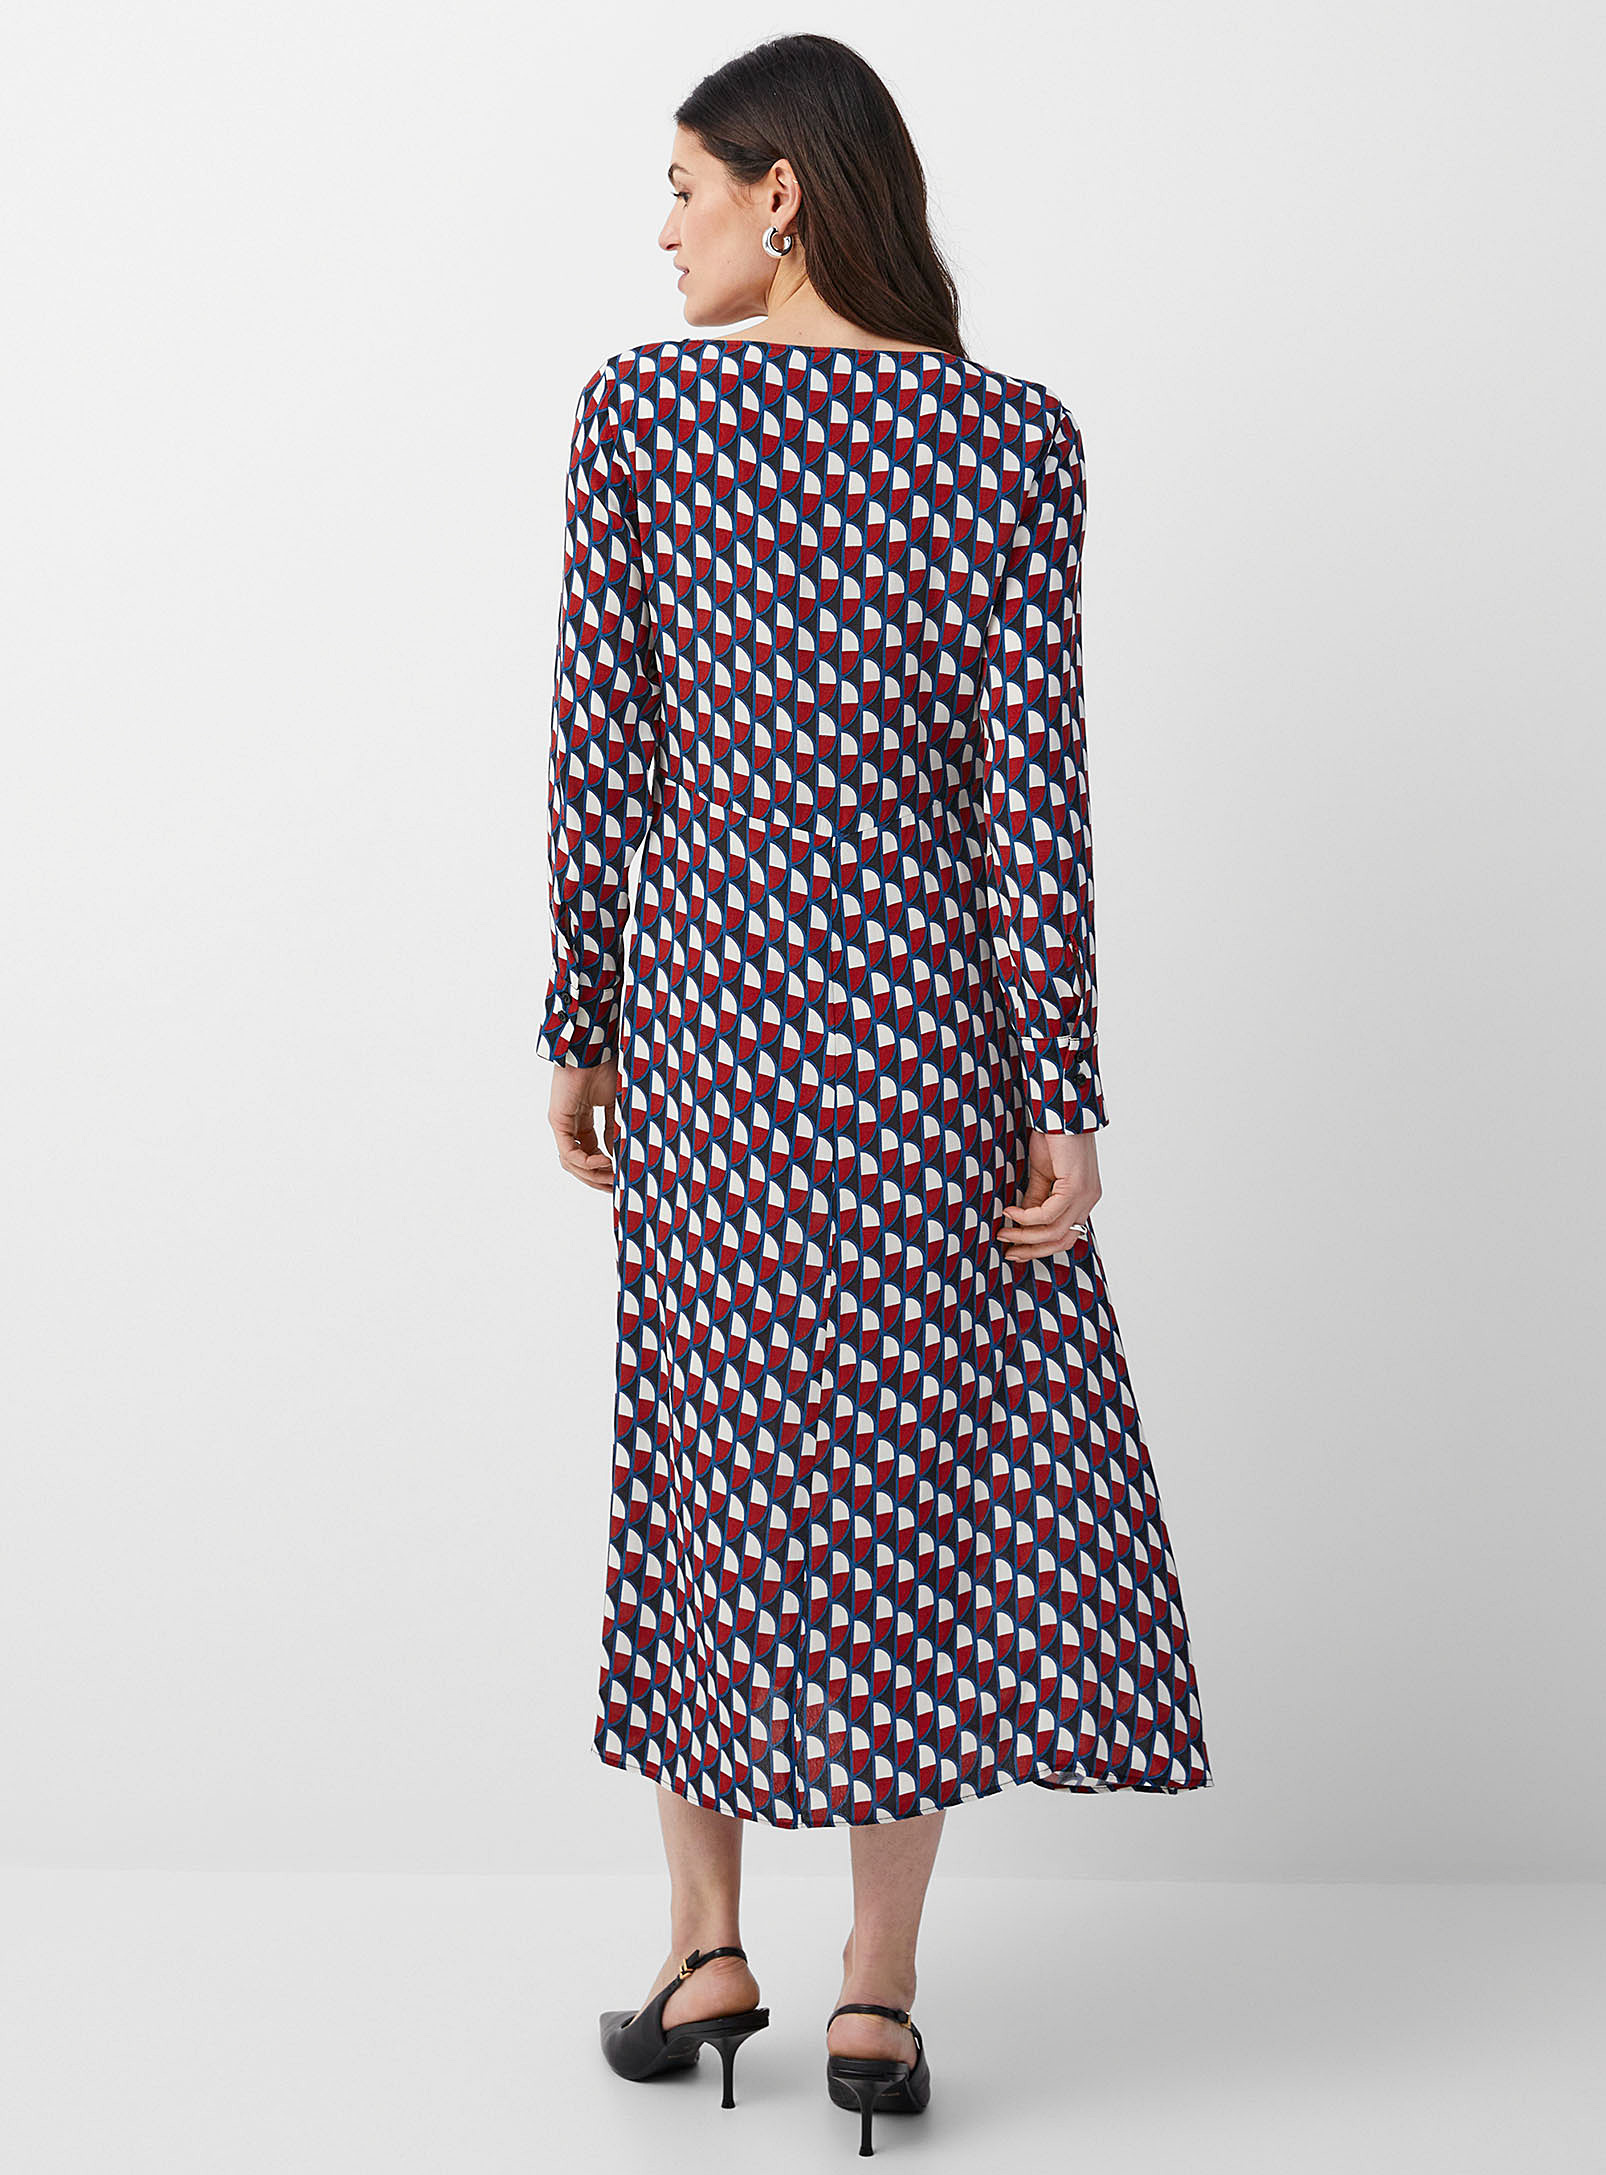 Sisley - La robe fluide tapisserie rétro